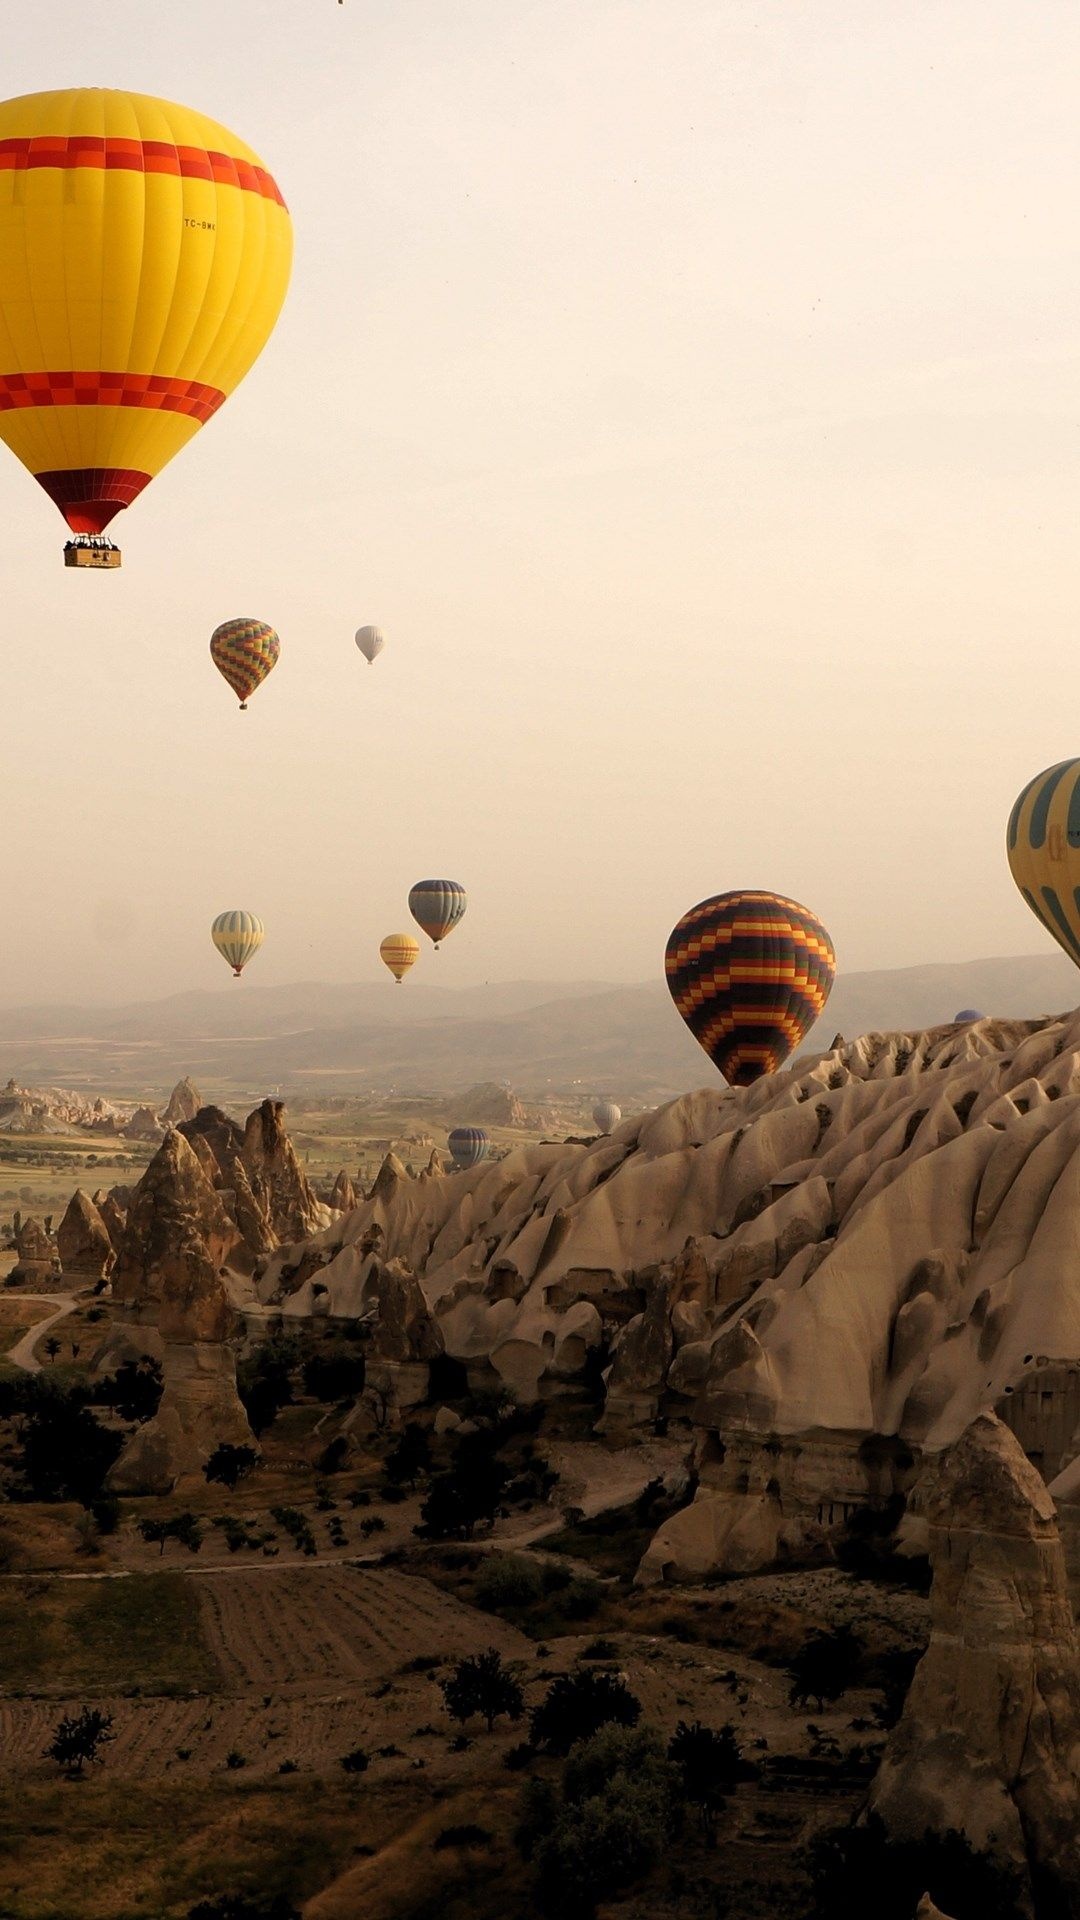 Air Sports: Lighter-than-air aircraft floating in a rock valley, Cappadocia, Hot air ballooning. 1080x1920 Full HD Wallpaper.